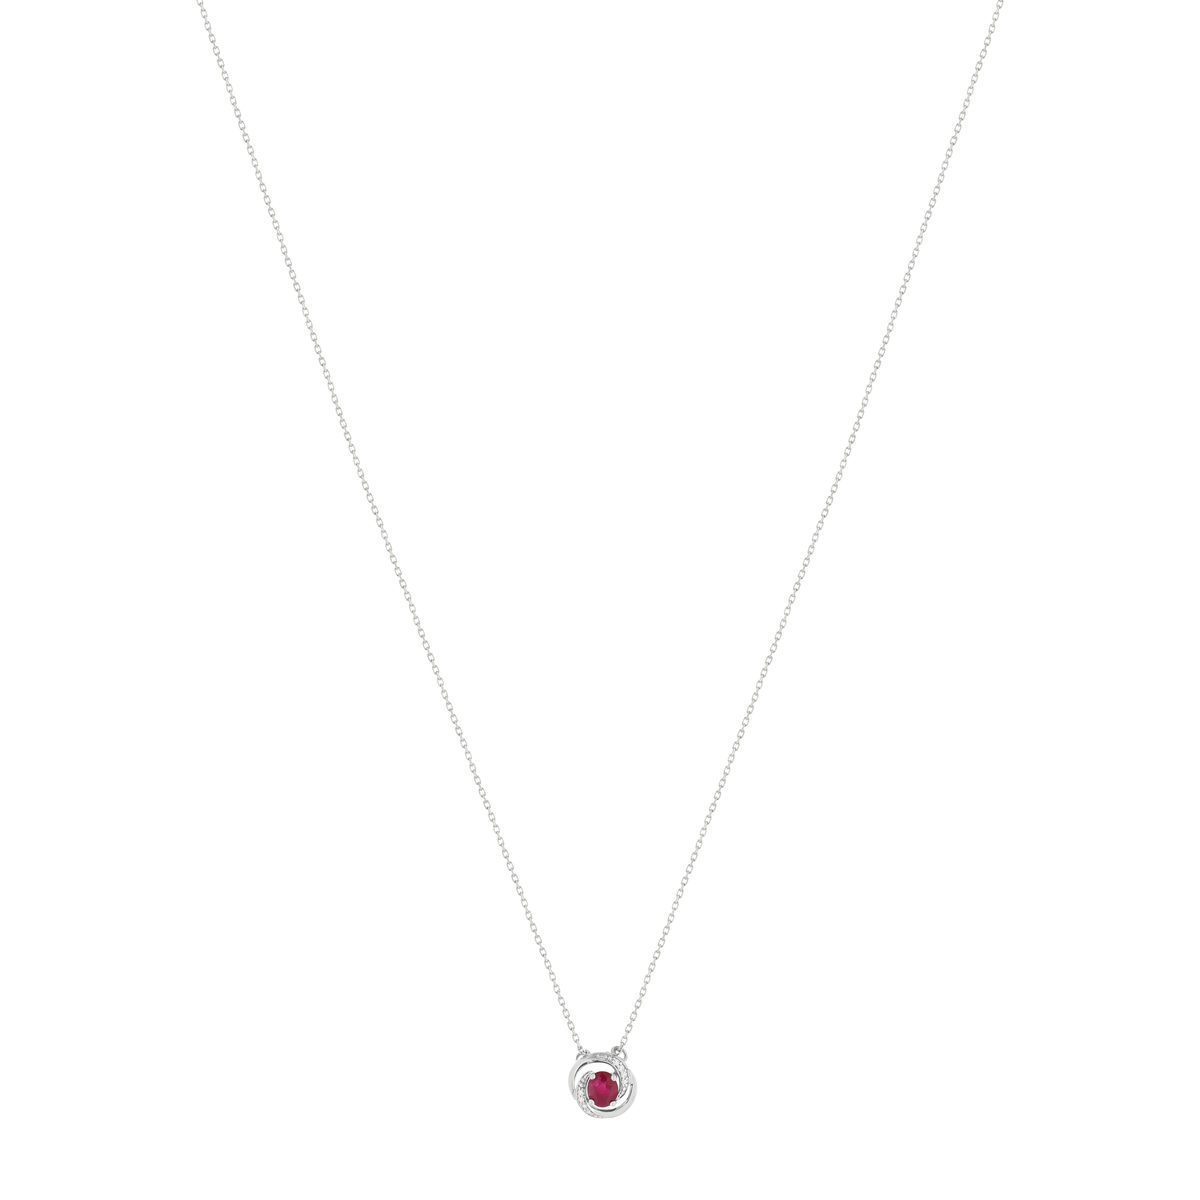 Collier or blanc 375, rubis, diamants. Longueur 42 cm. - vue 2